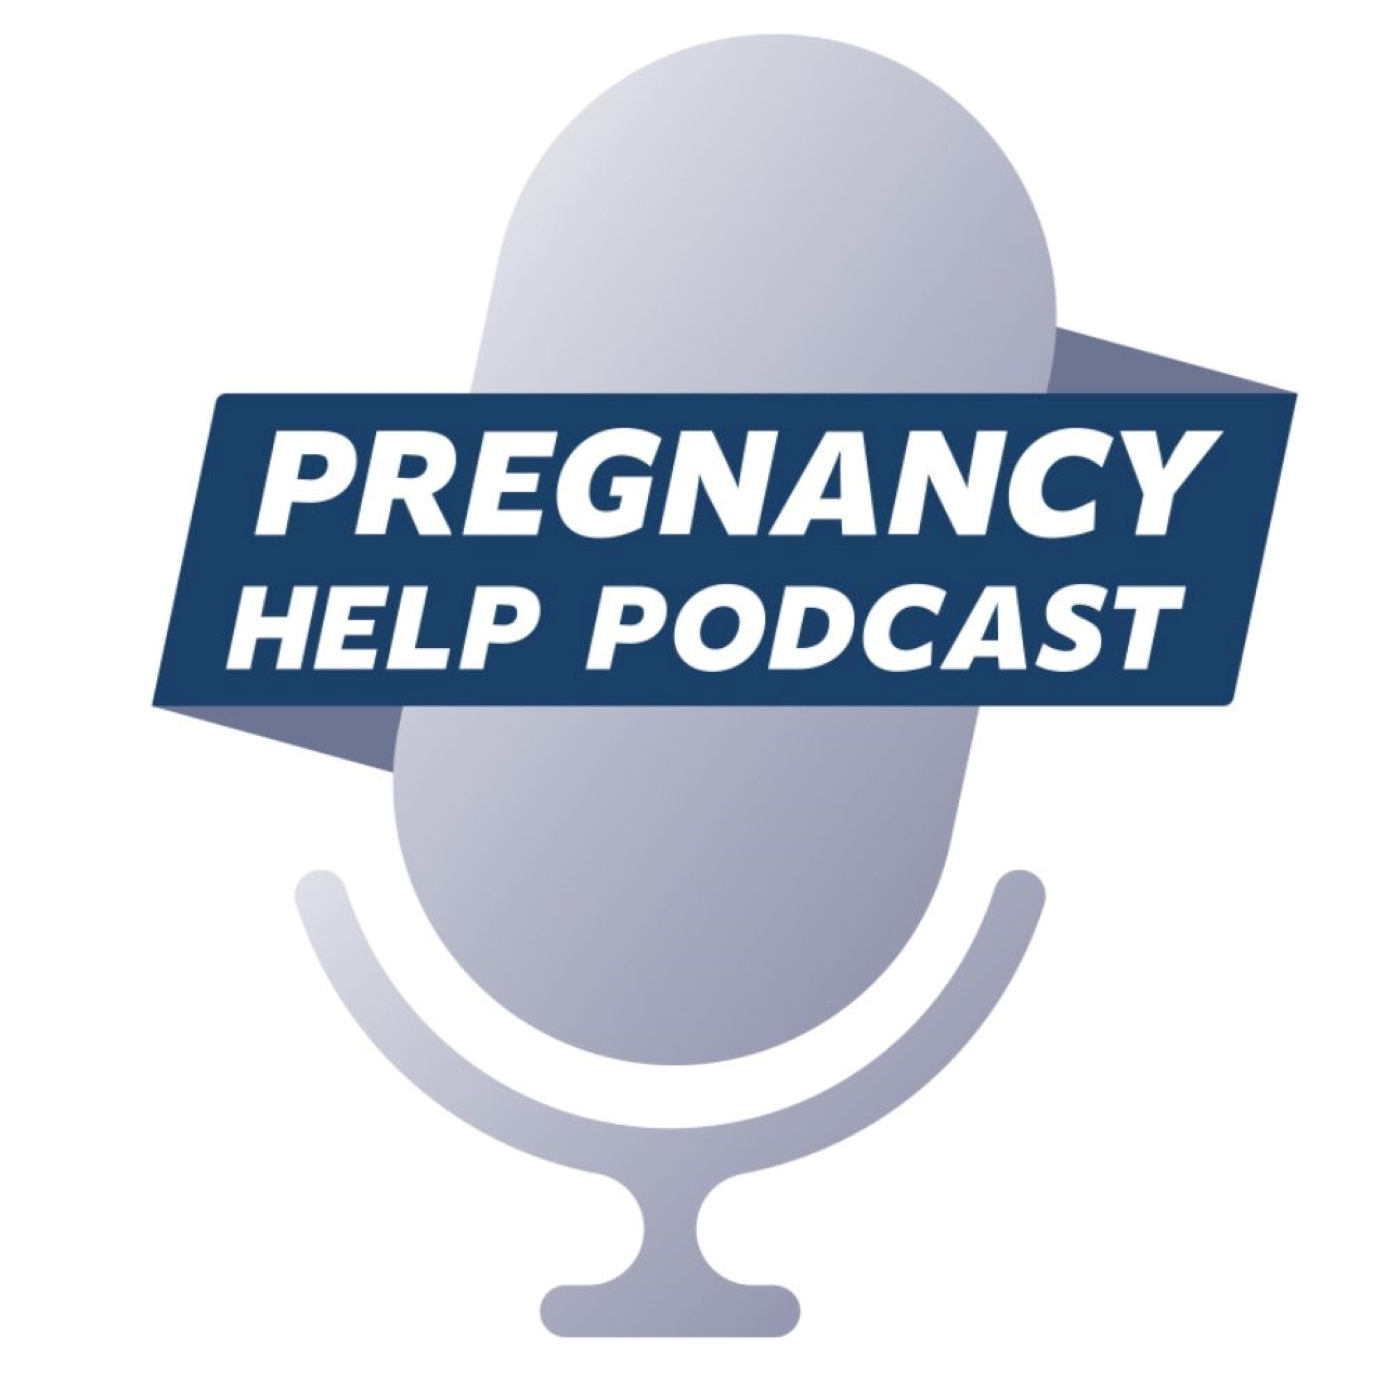 Pregnancy Help Podcast